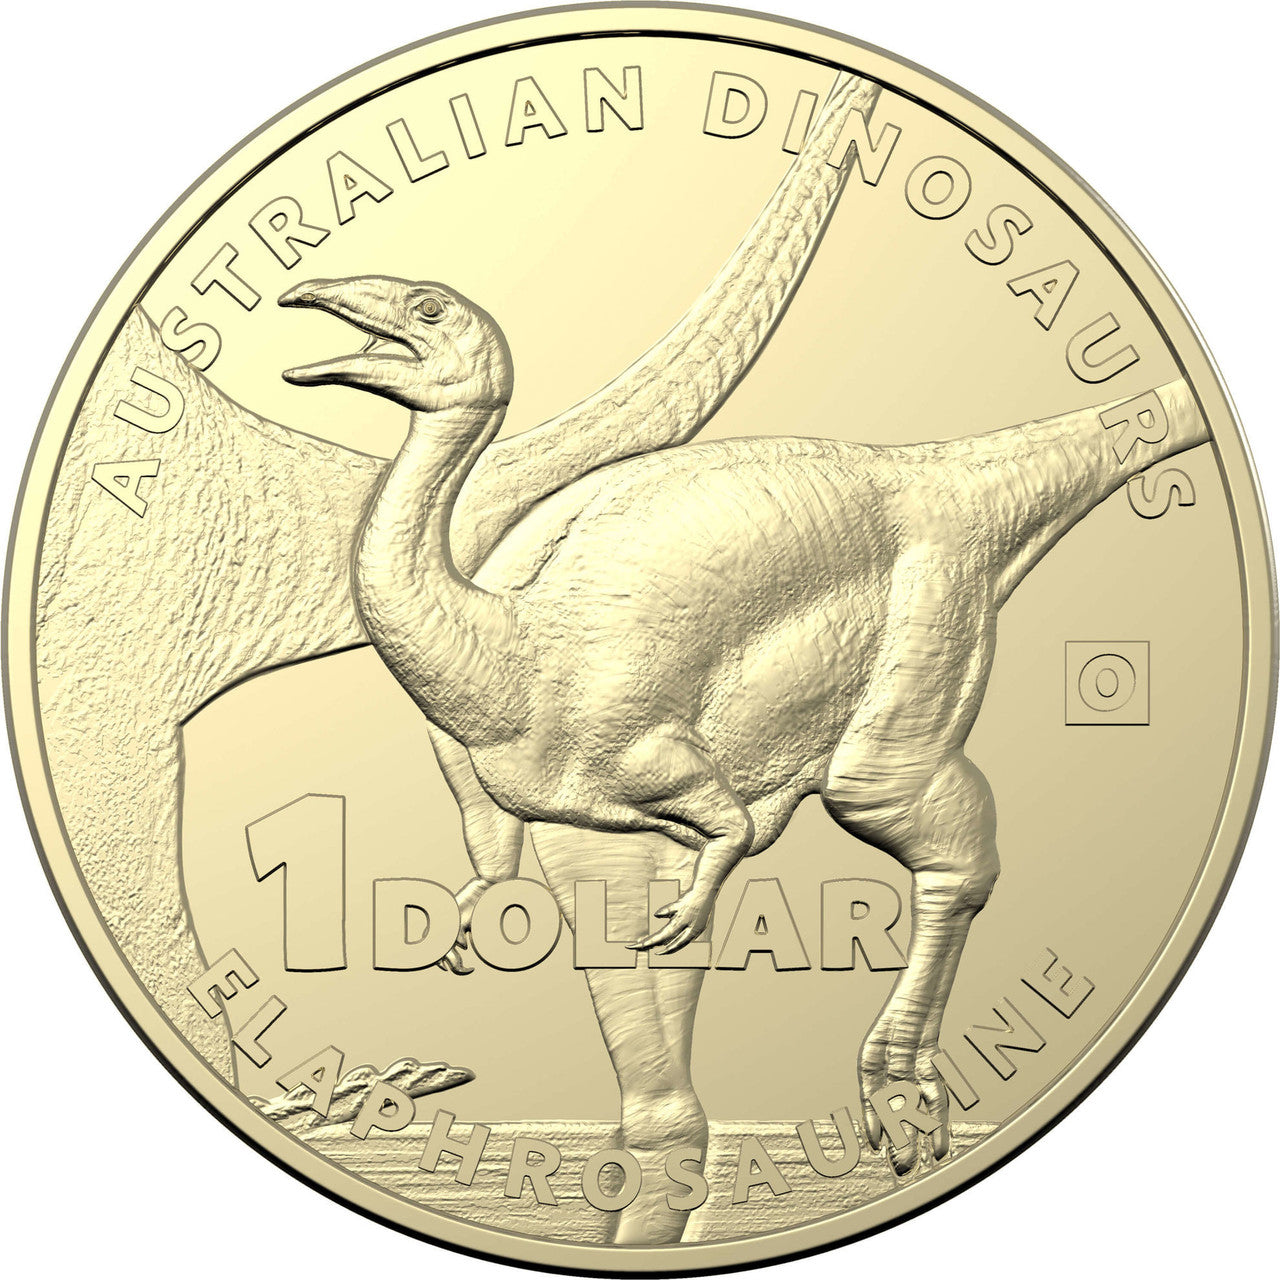 Australian Dinosaurs 2022 Uncirculated Privy Mark Four-Coin Collection